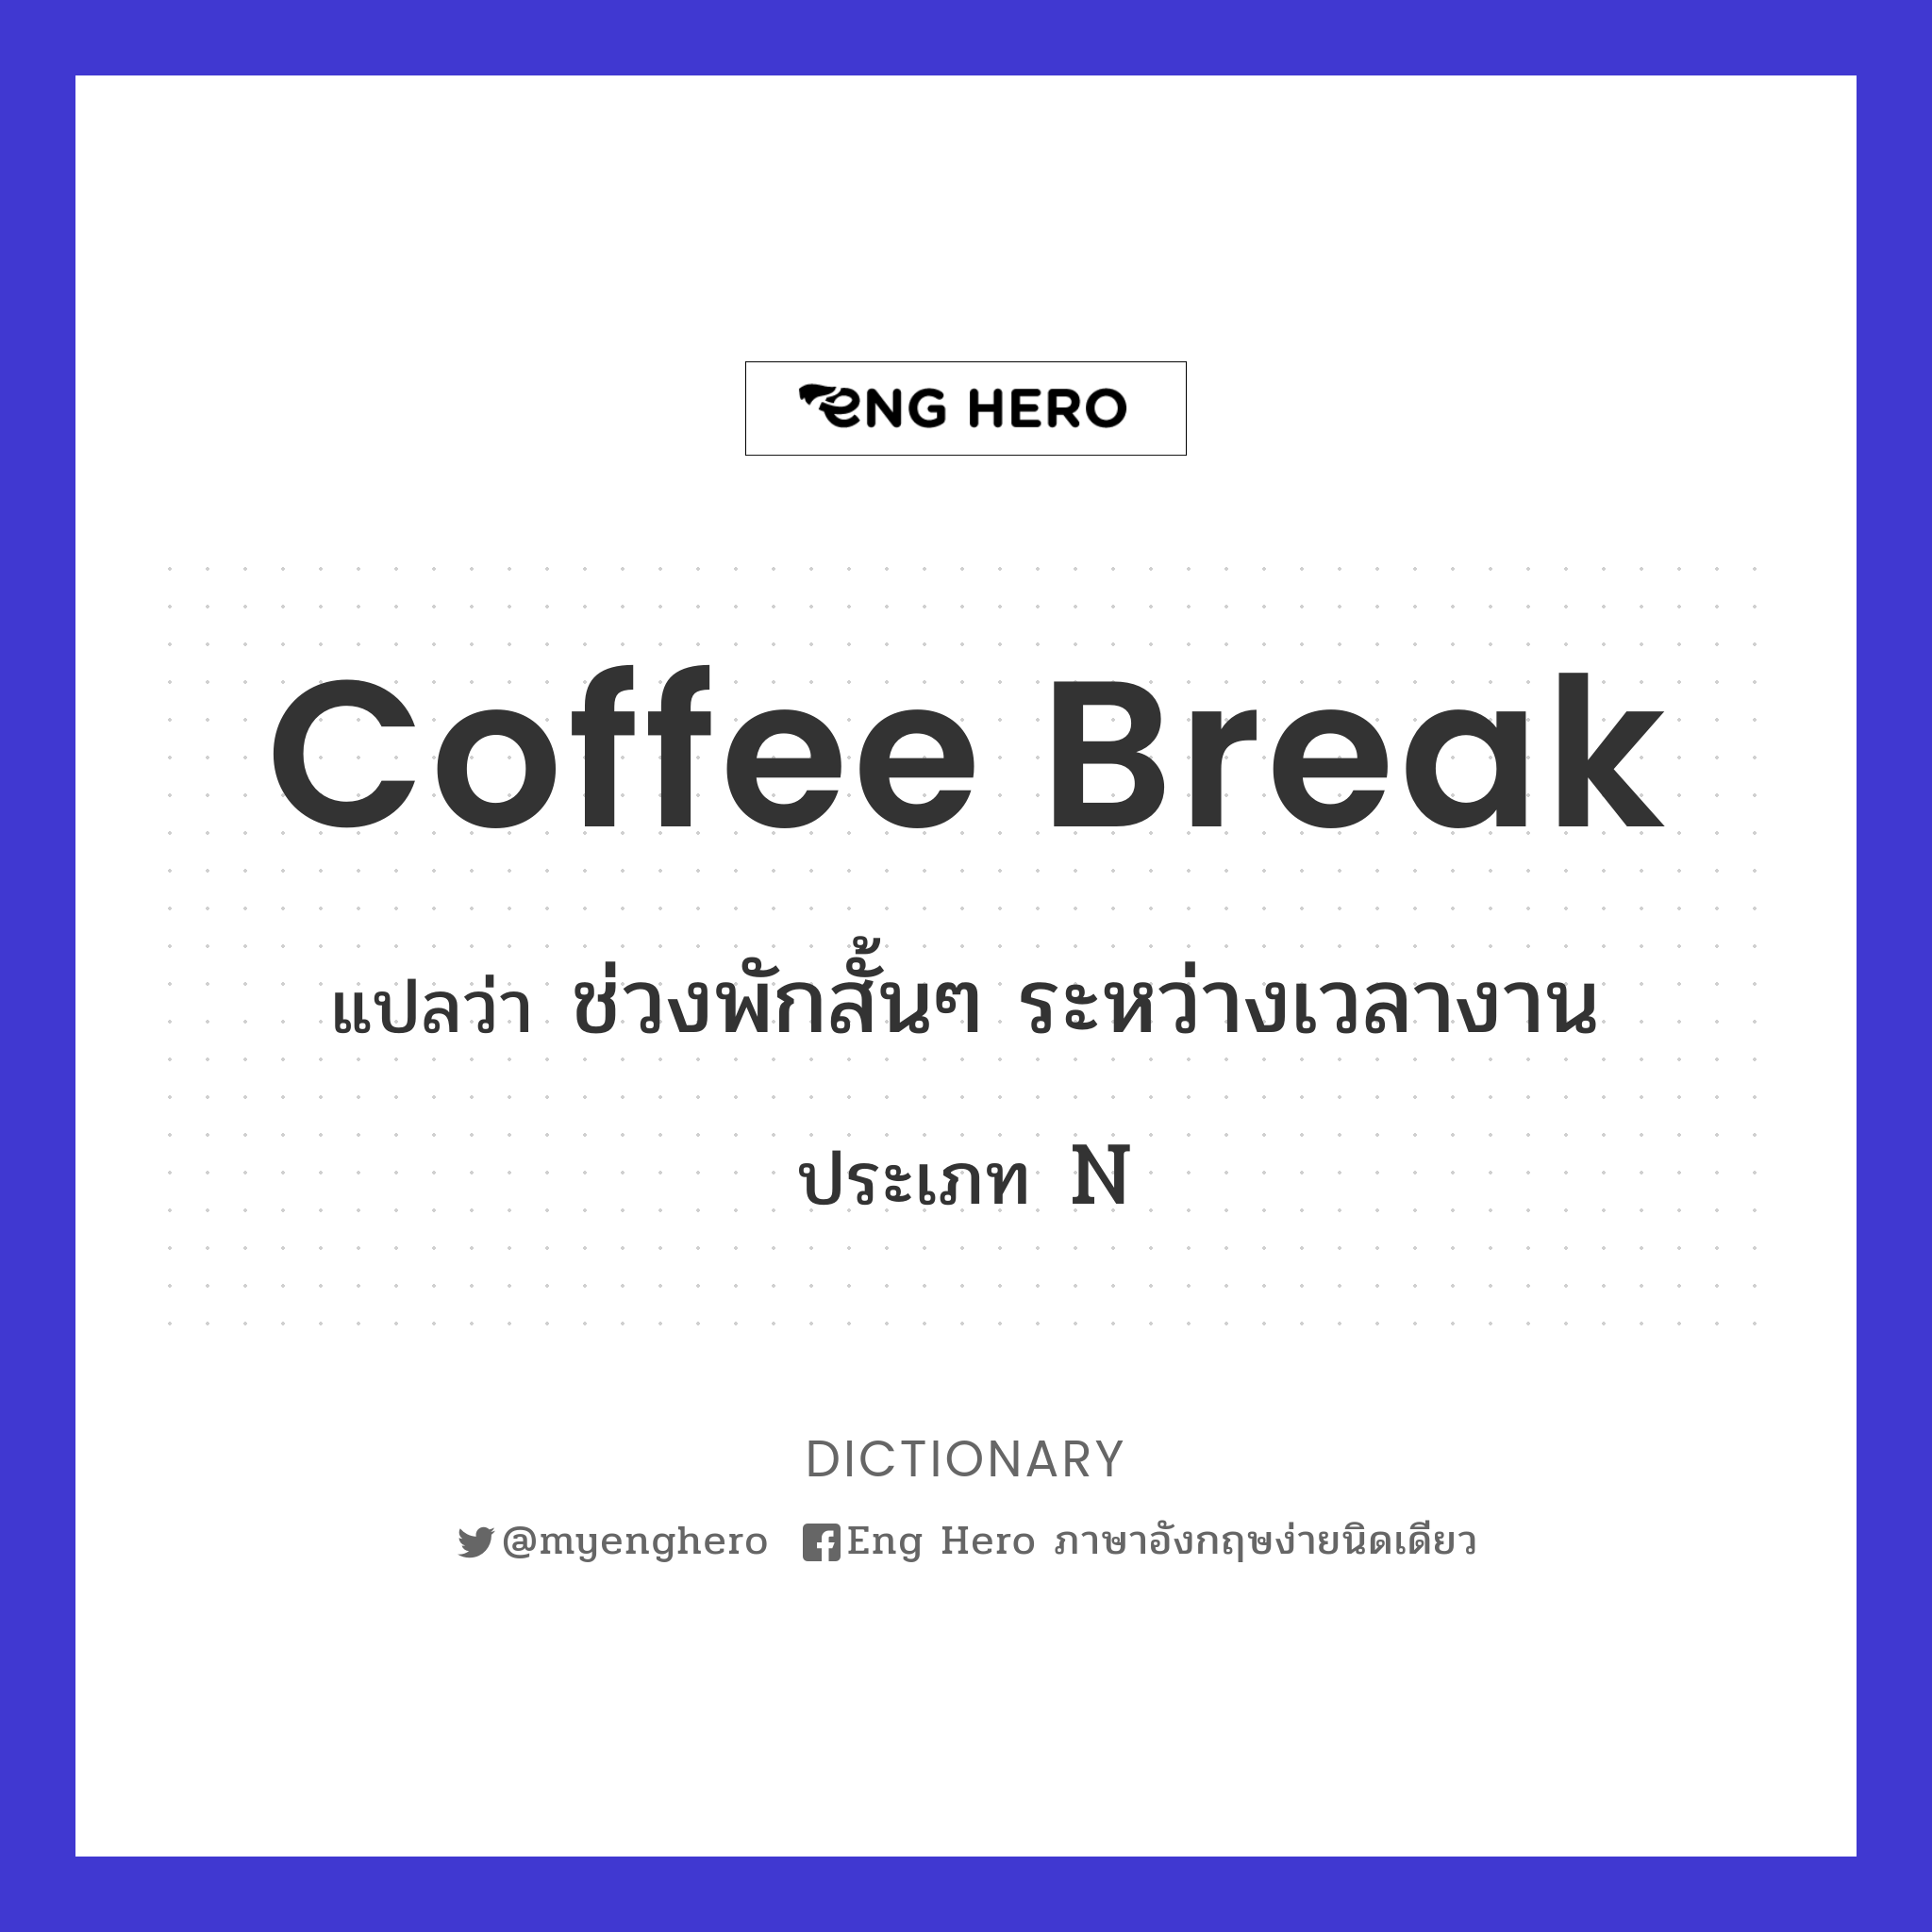 coffee break languages